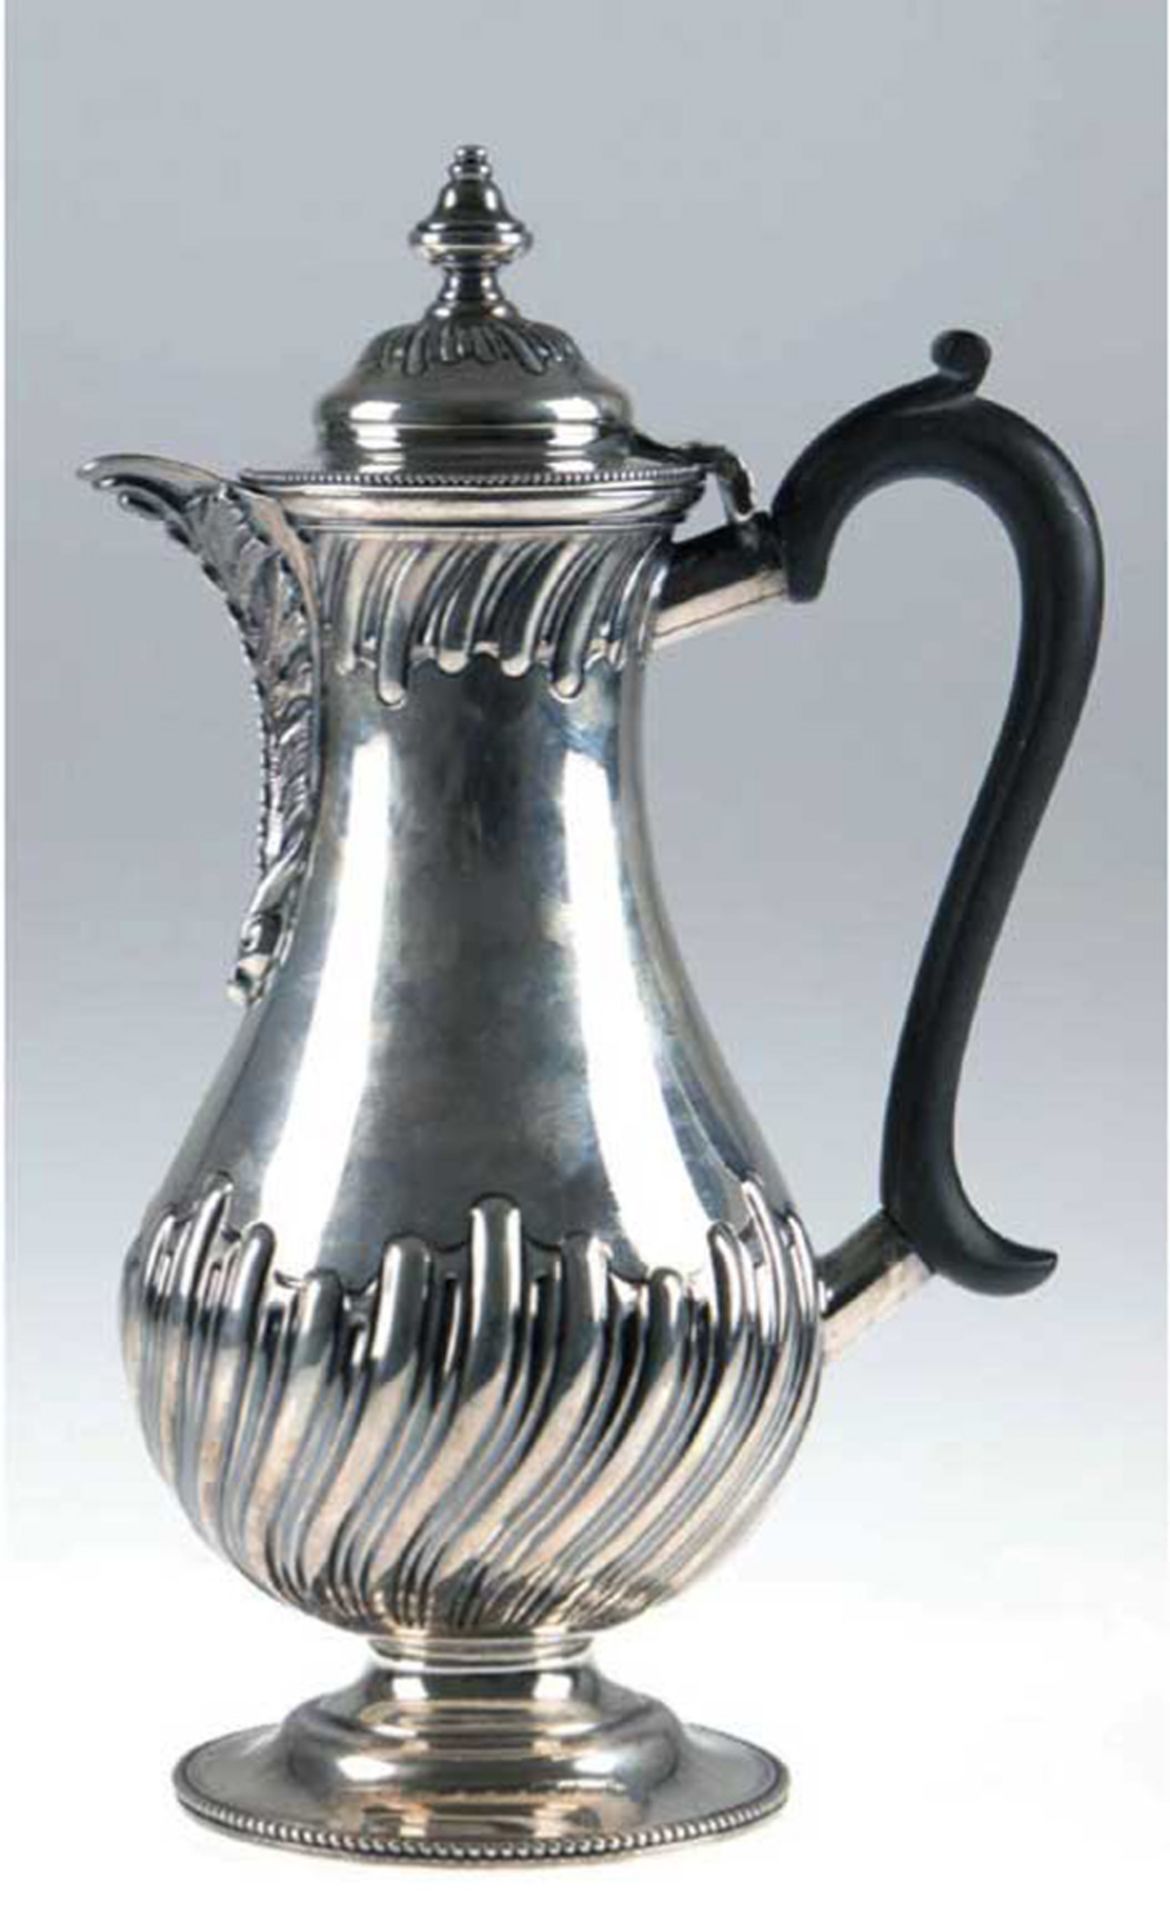 Kaffeekanne, Sheffield 1901, 925er Silber, ca. 550 g, barocke Form mit Holzgriff, geschweift godron